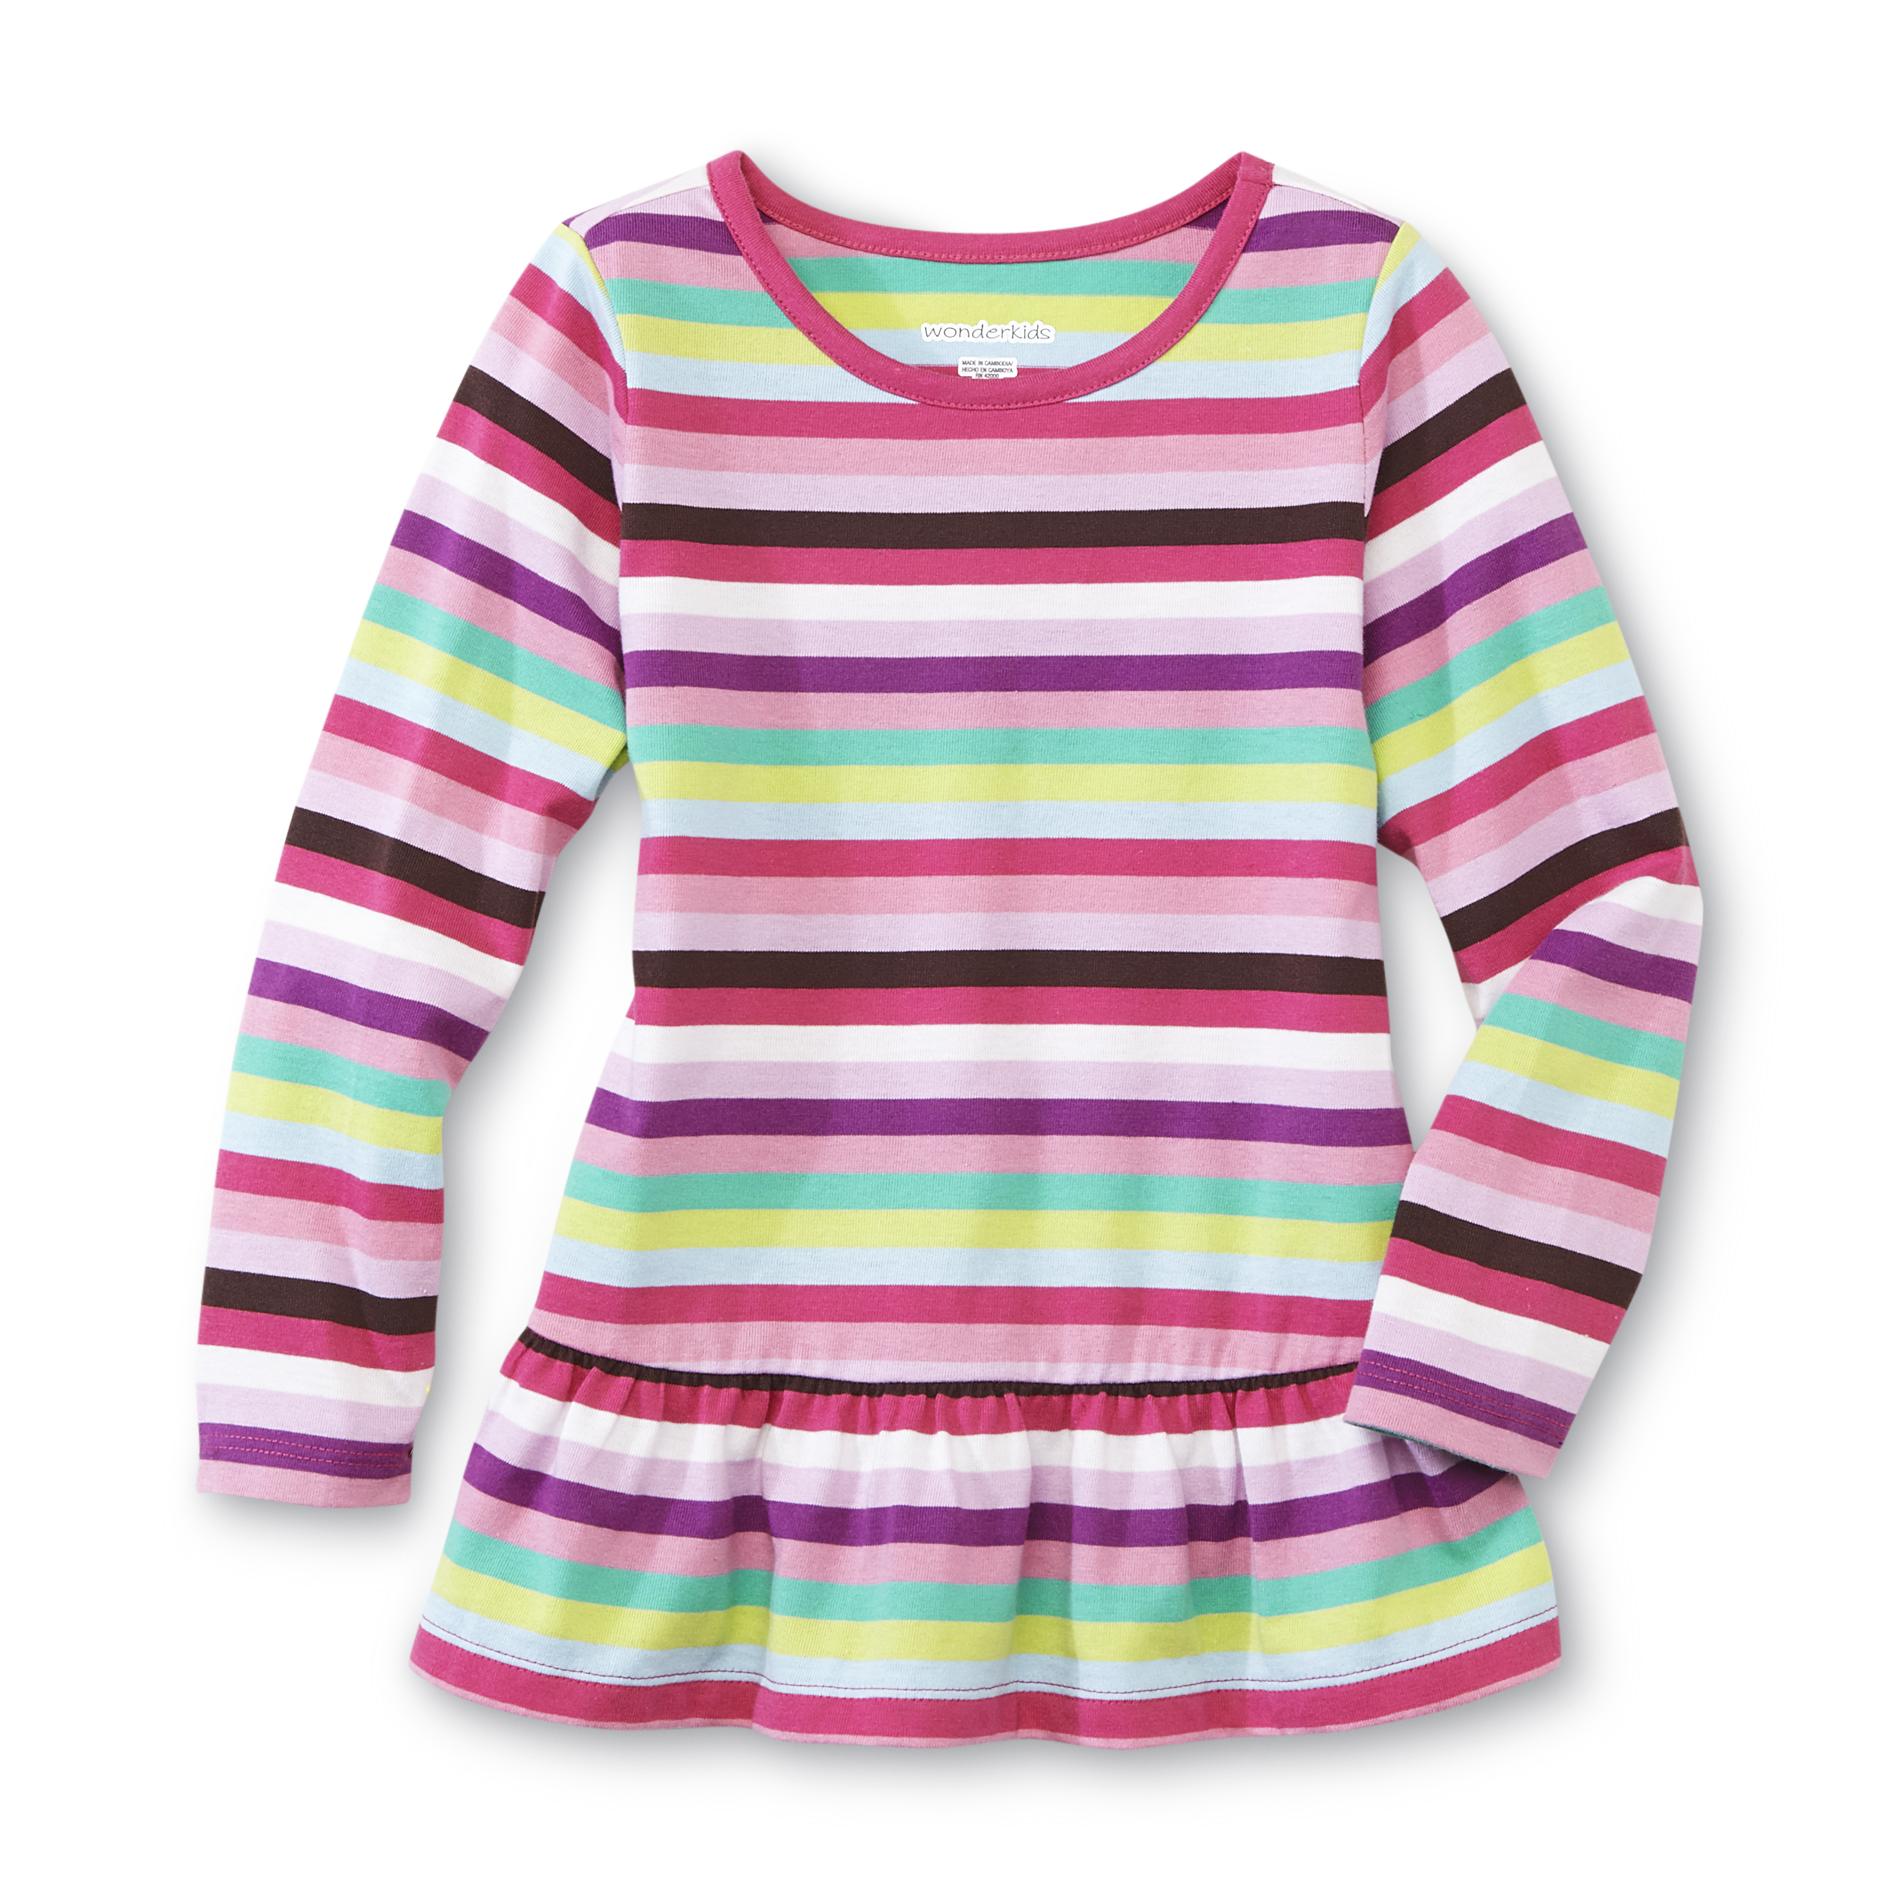 WonderKids Infant & Toddler Girl's Long-Sleeve Peplum Top - Striped